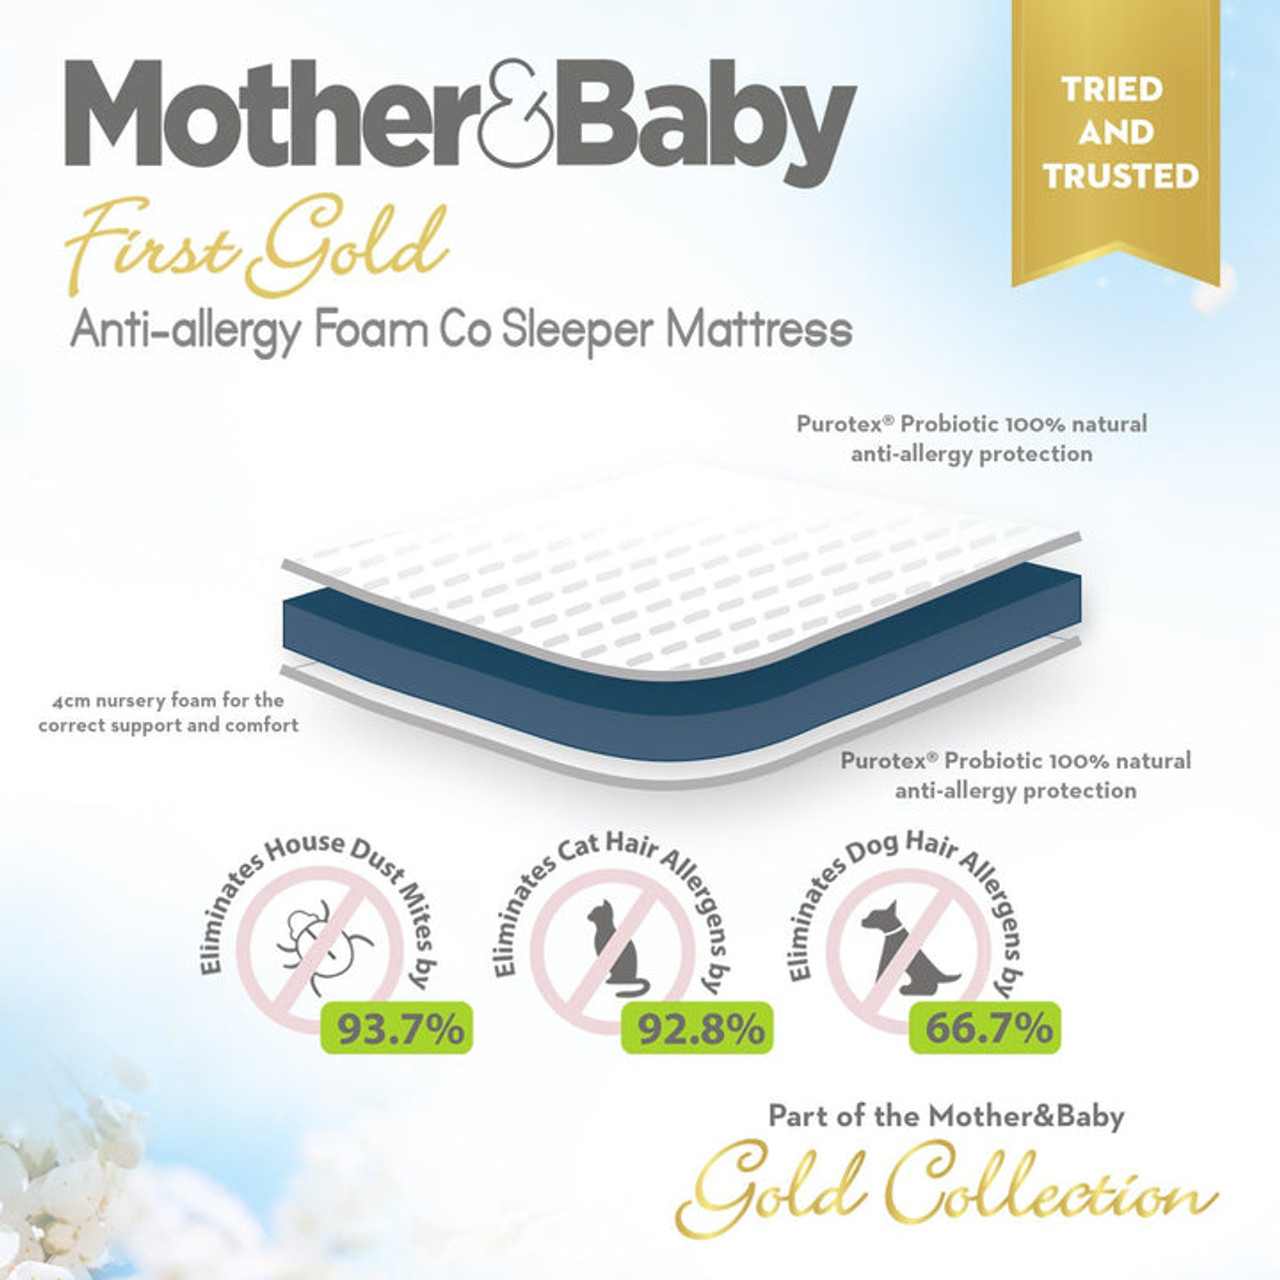 Mother&Baby Co-Sleeper Mattress and Feeding pillow bundle